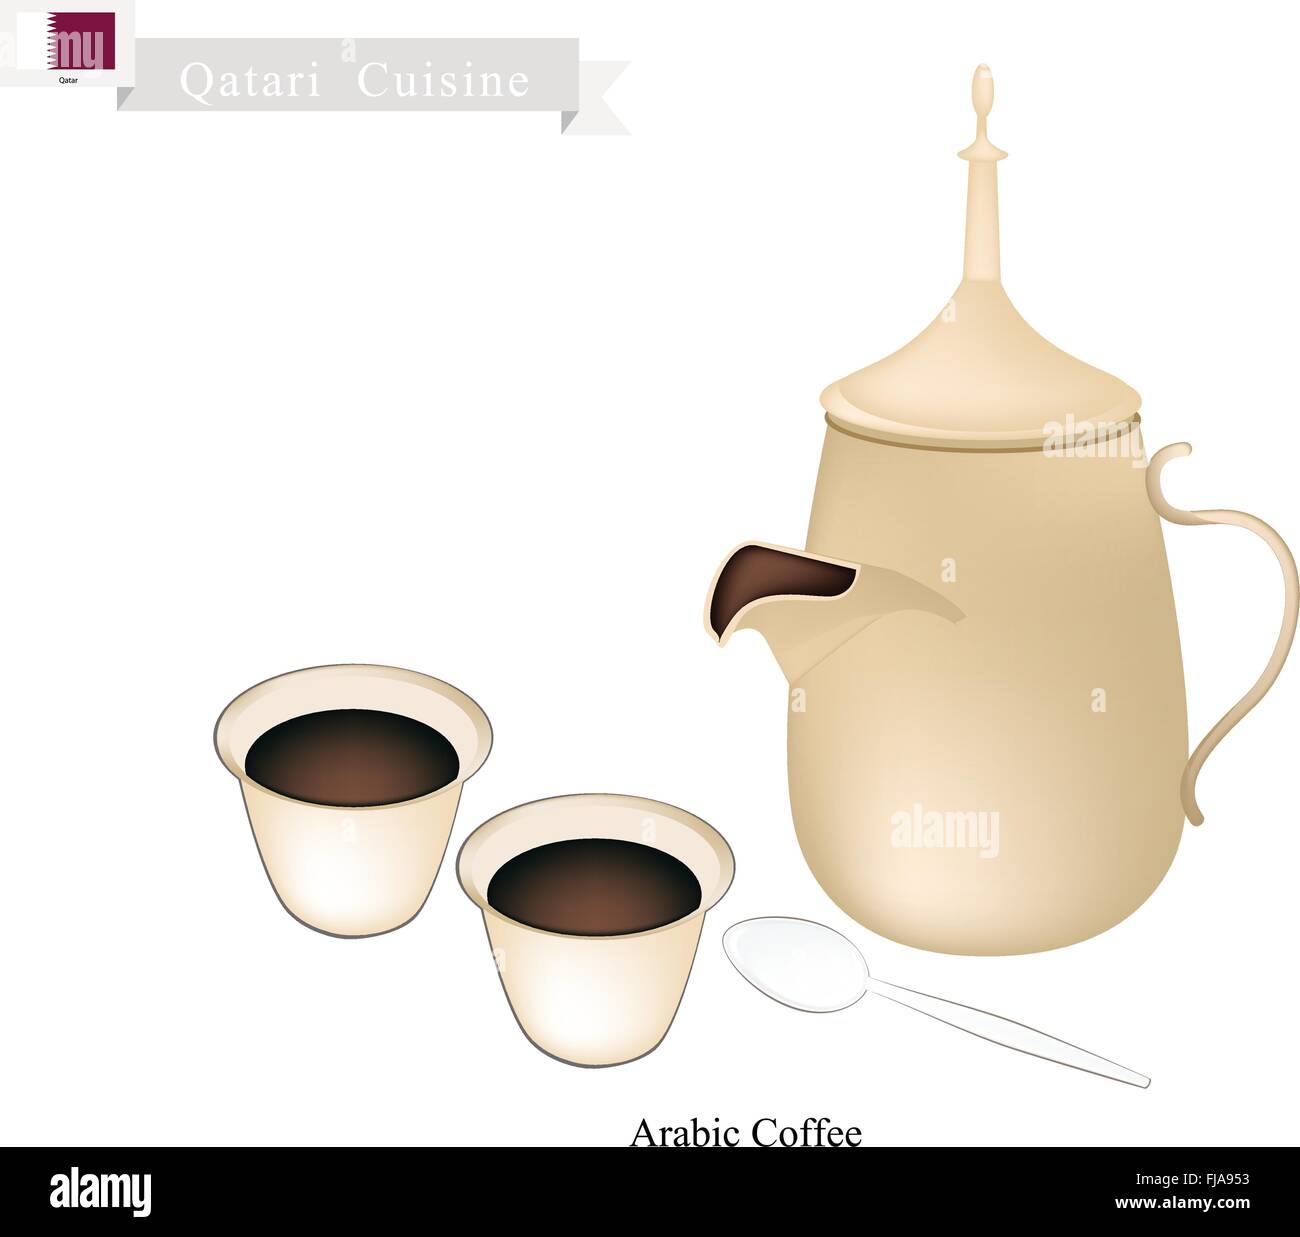 Qatari Cuisine, Arabic Coffee or Coffee Brewed from Dark Roast Coffee Beans Spiced with Cardamom. A Popular Beverage in Qatar Stock Vector